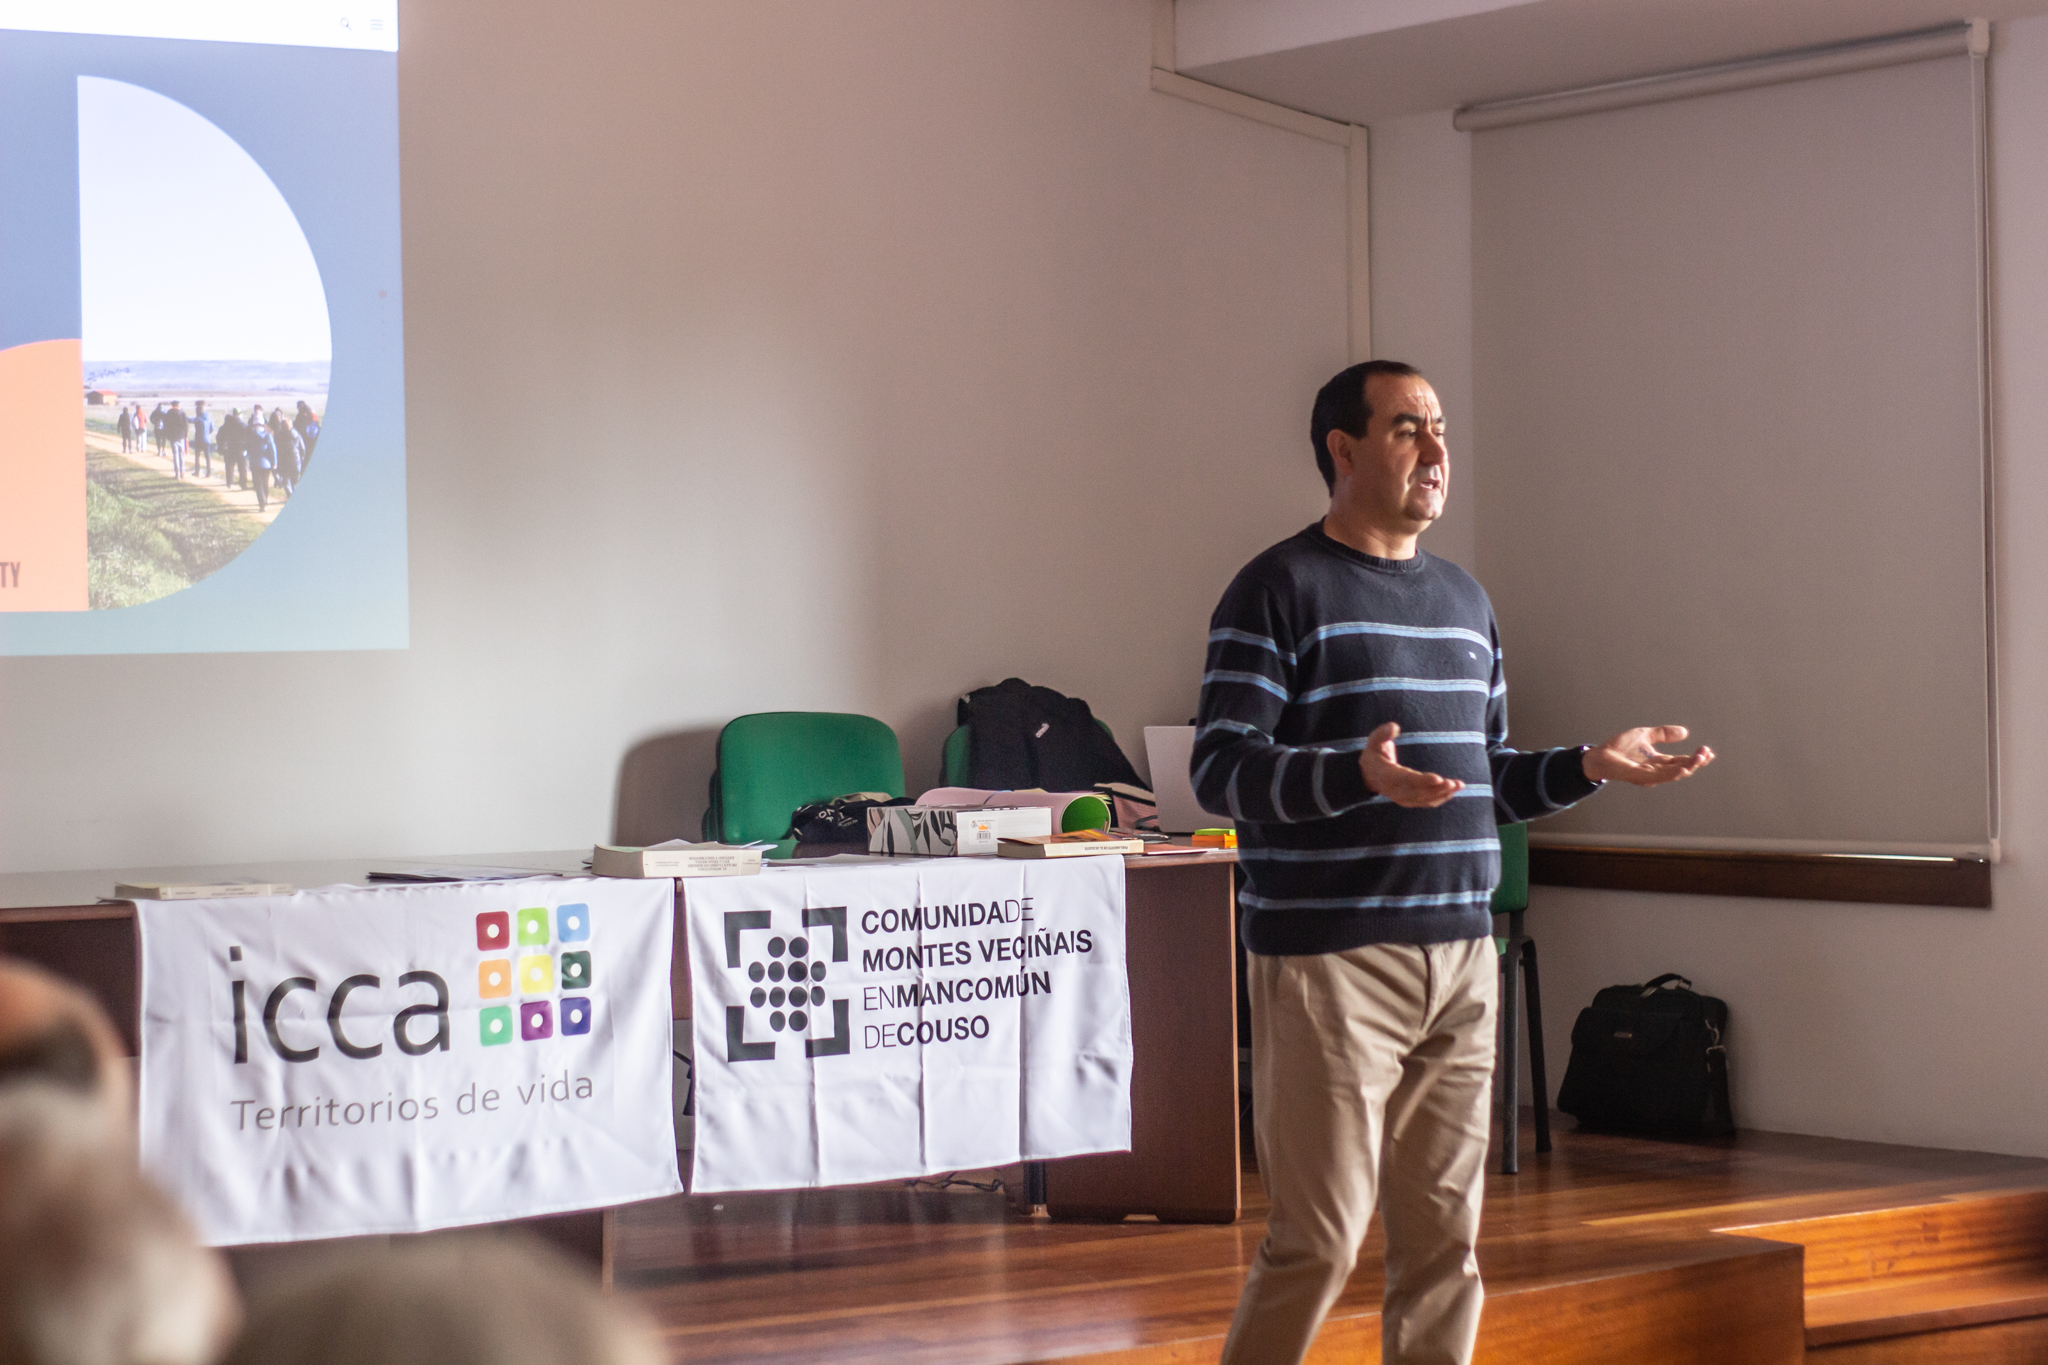 Montes de Couso citizen-commissioner Xosé Antonio Araúxo during his presentation. © Andreia Iglesias